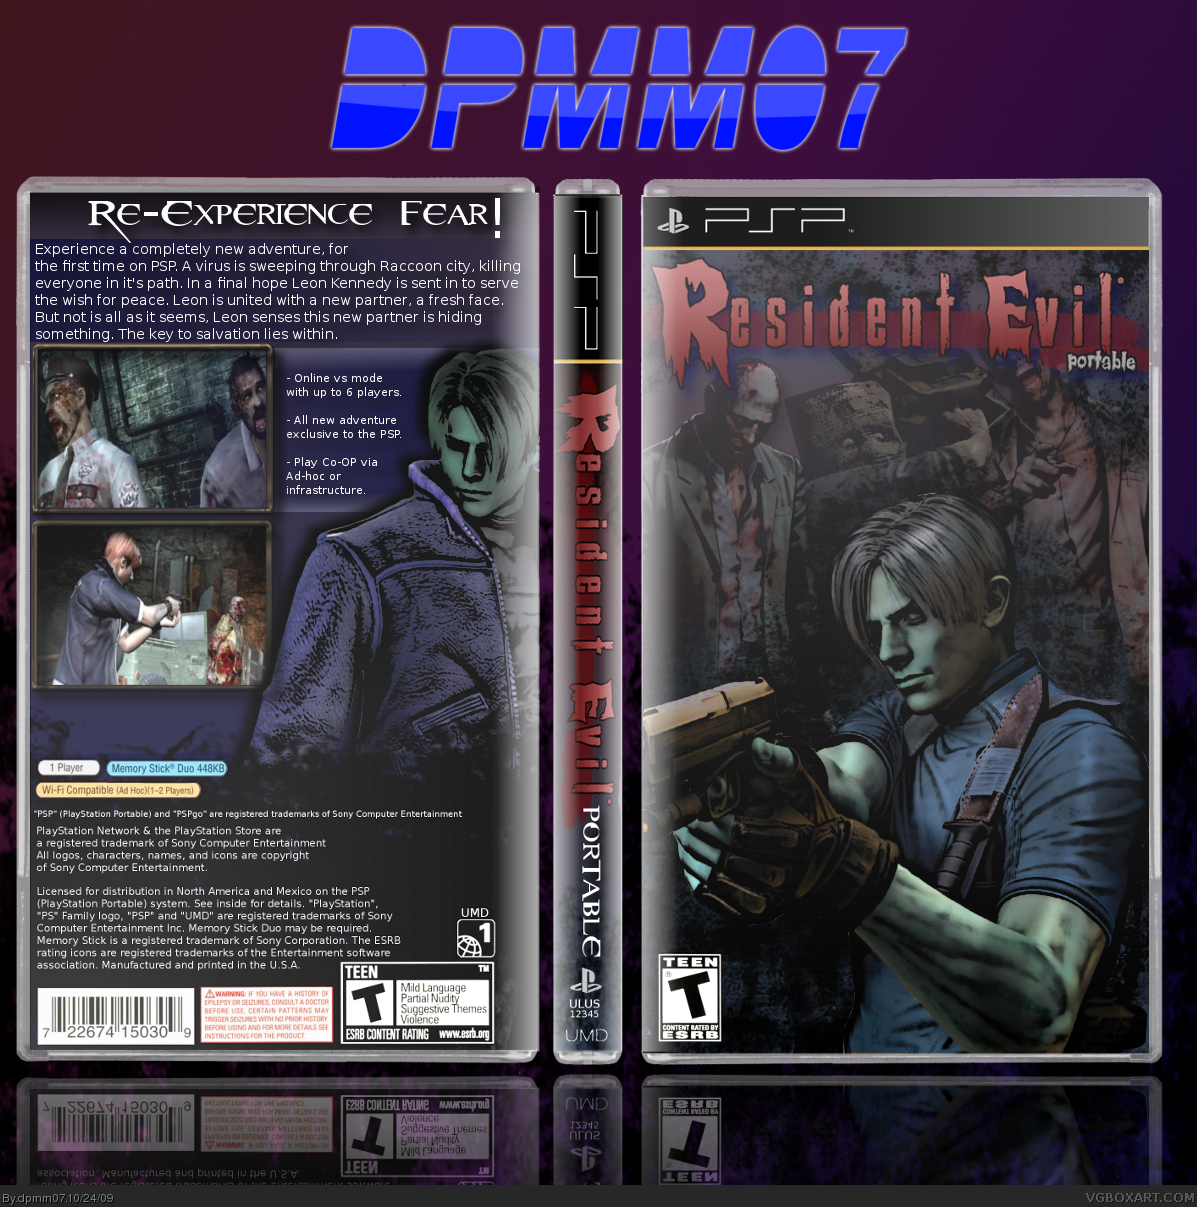 Resident Evil: Portable box cover